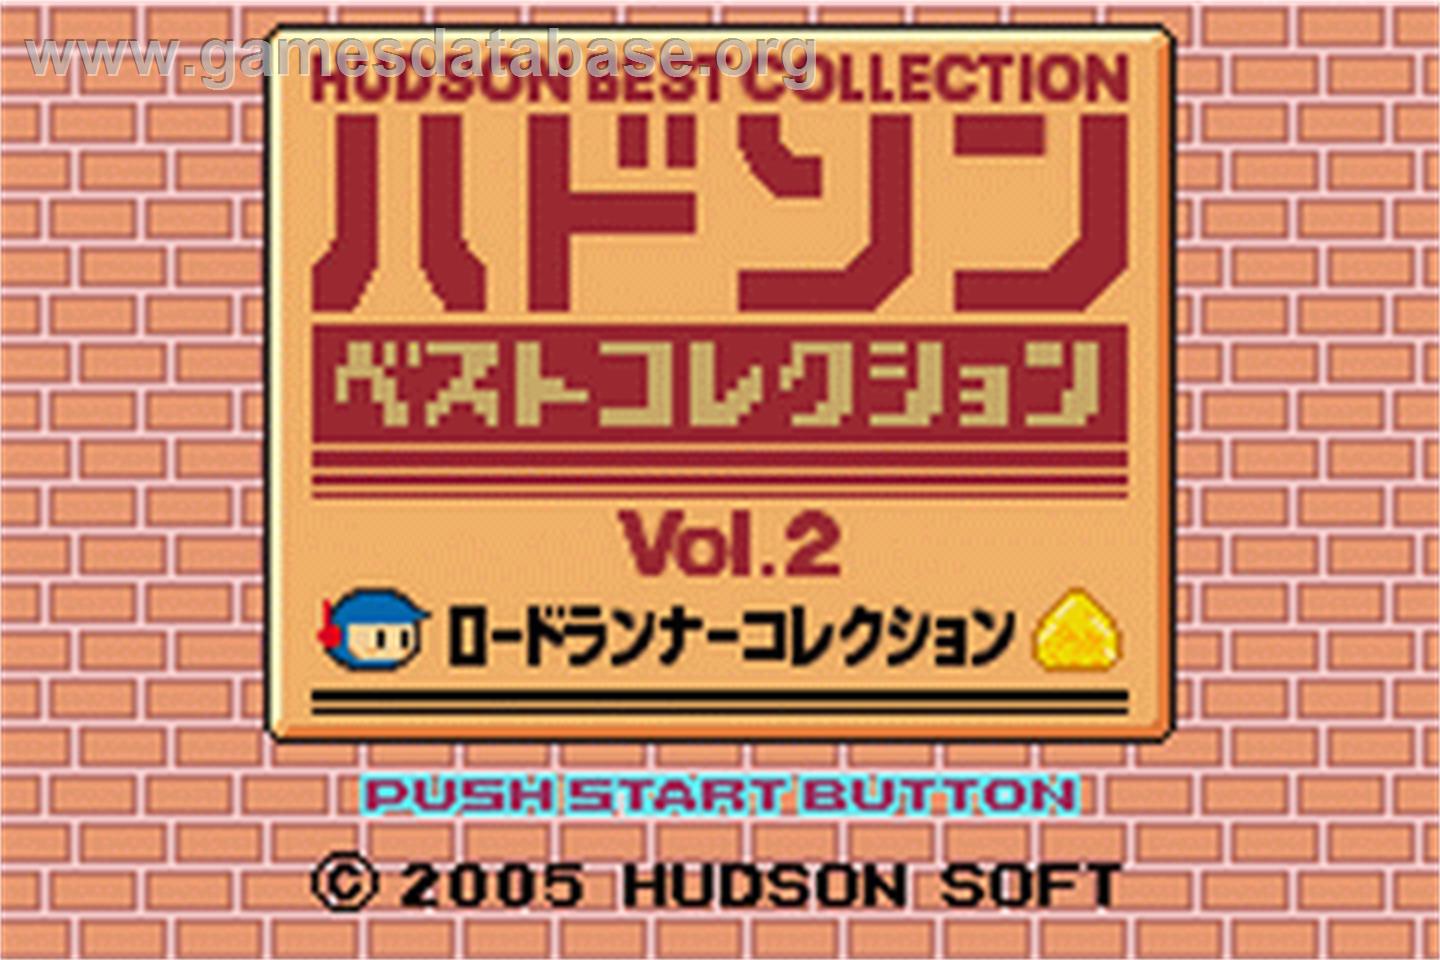 Hudson Best Collection Vol. 2: Lode Runner Collection - Nintendo Game Boy Advance - Artwork - Title Screen